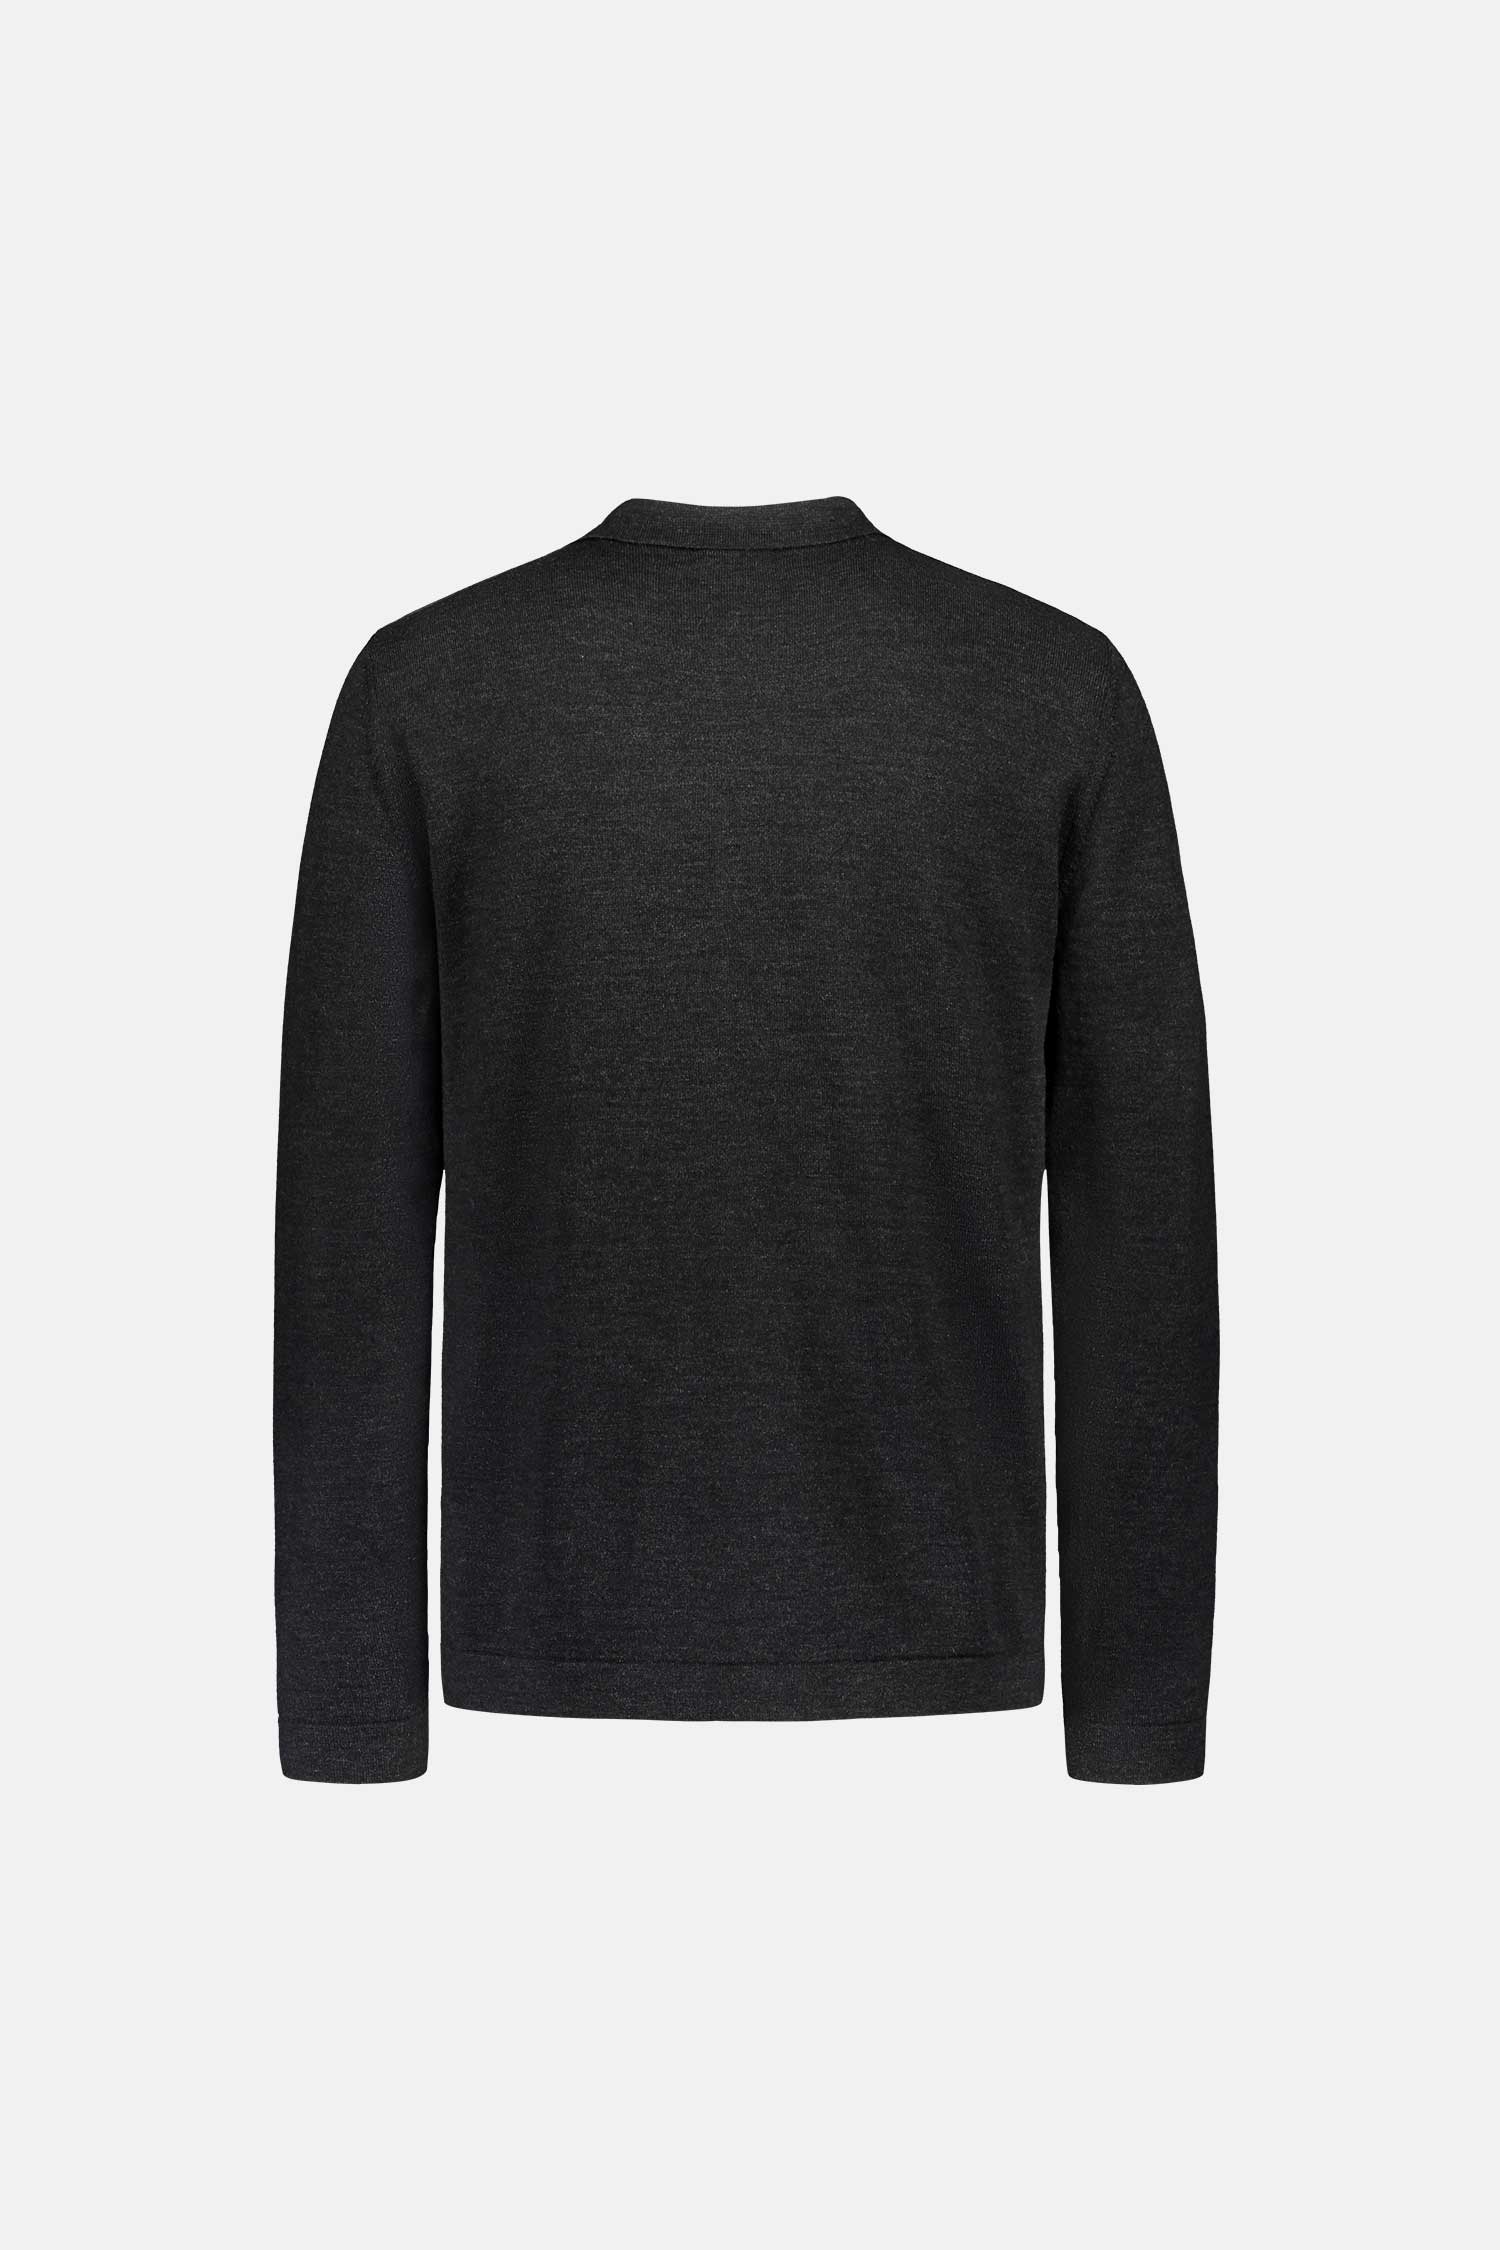 Frenn Eero sustainable premium quality extra fine merino wool knitted shirt anthracite